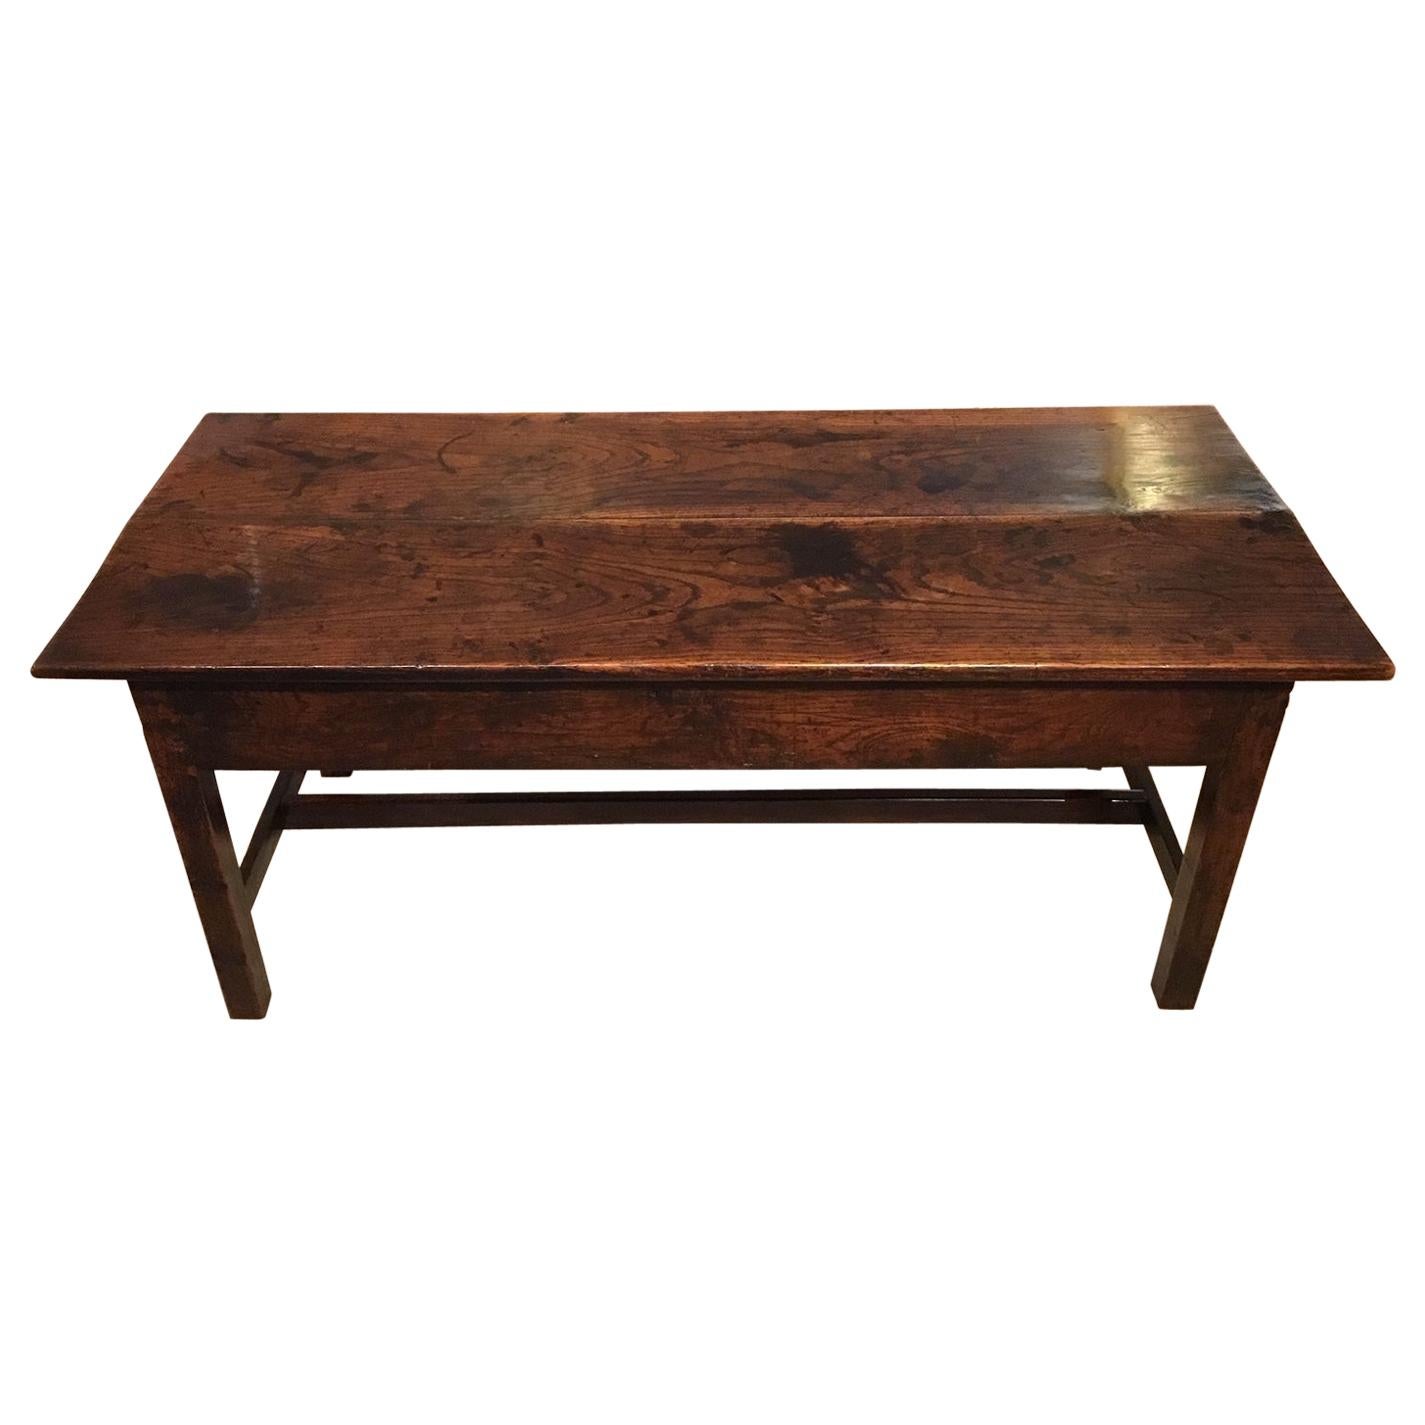 18th Century Antique Elm Coffee Table